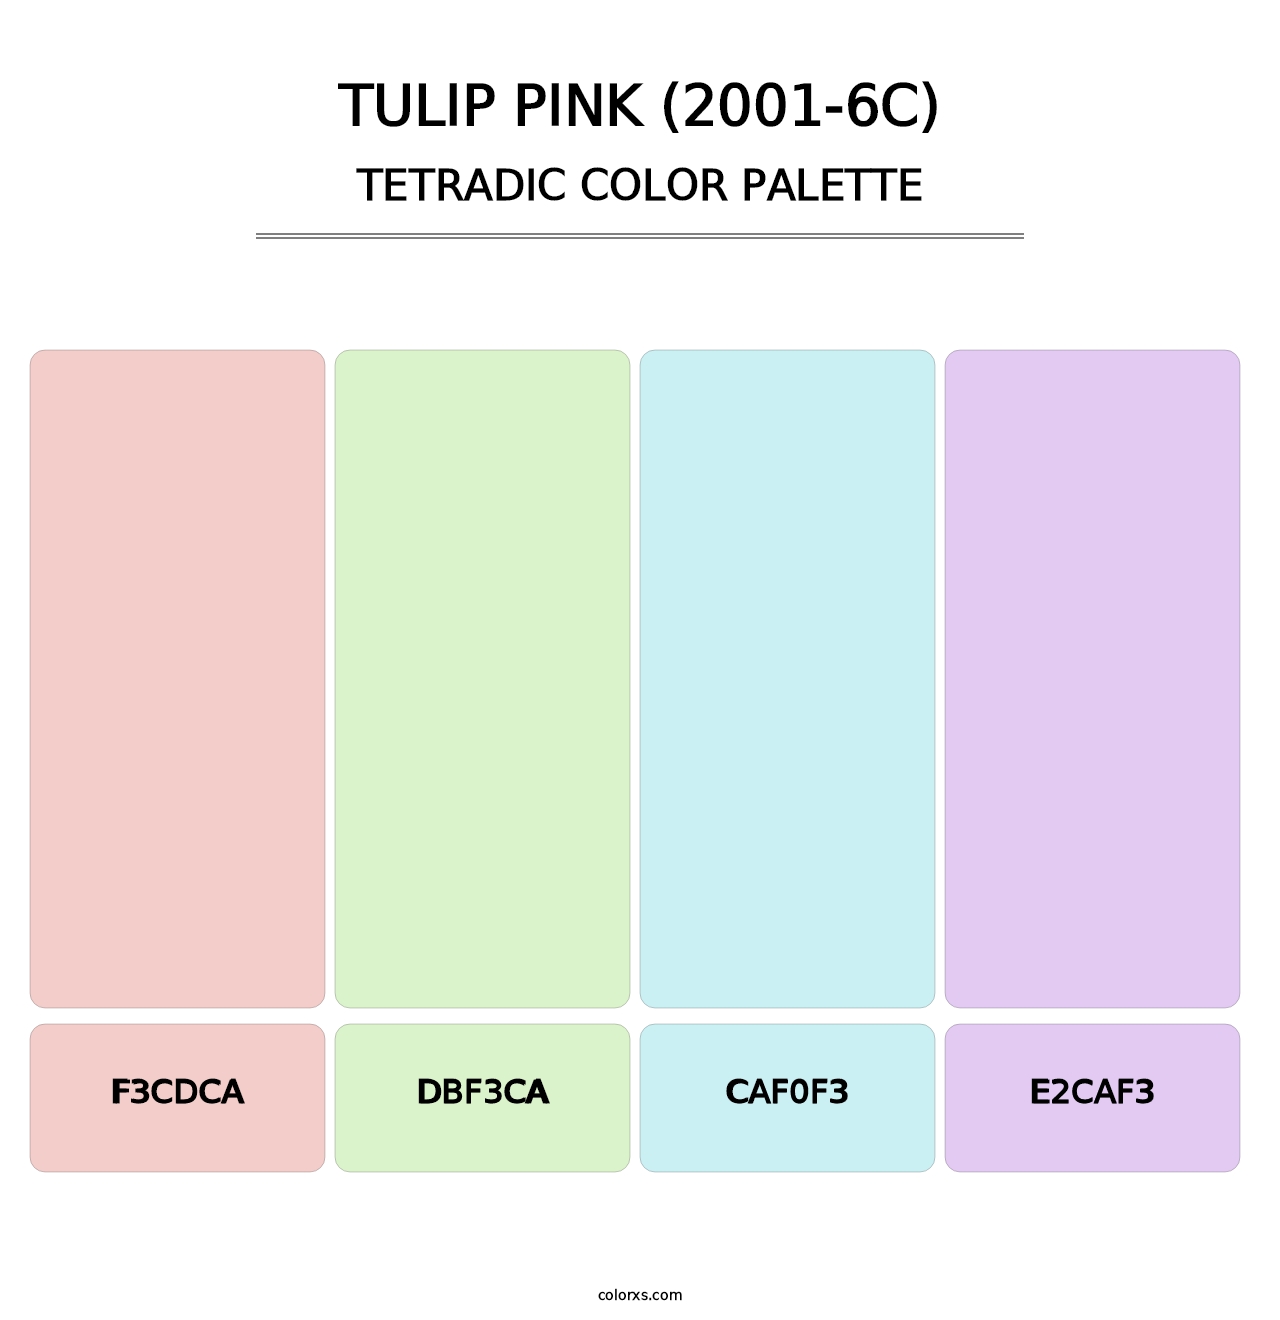 Tulip Pink (2001-6C) - Tetradic Color Palette